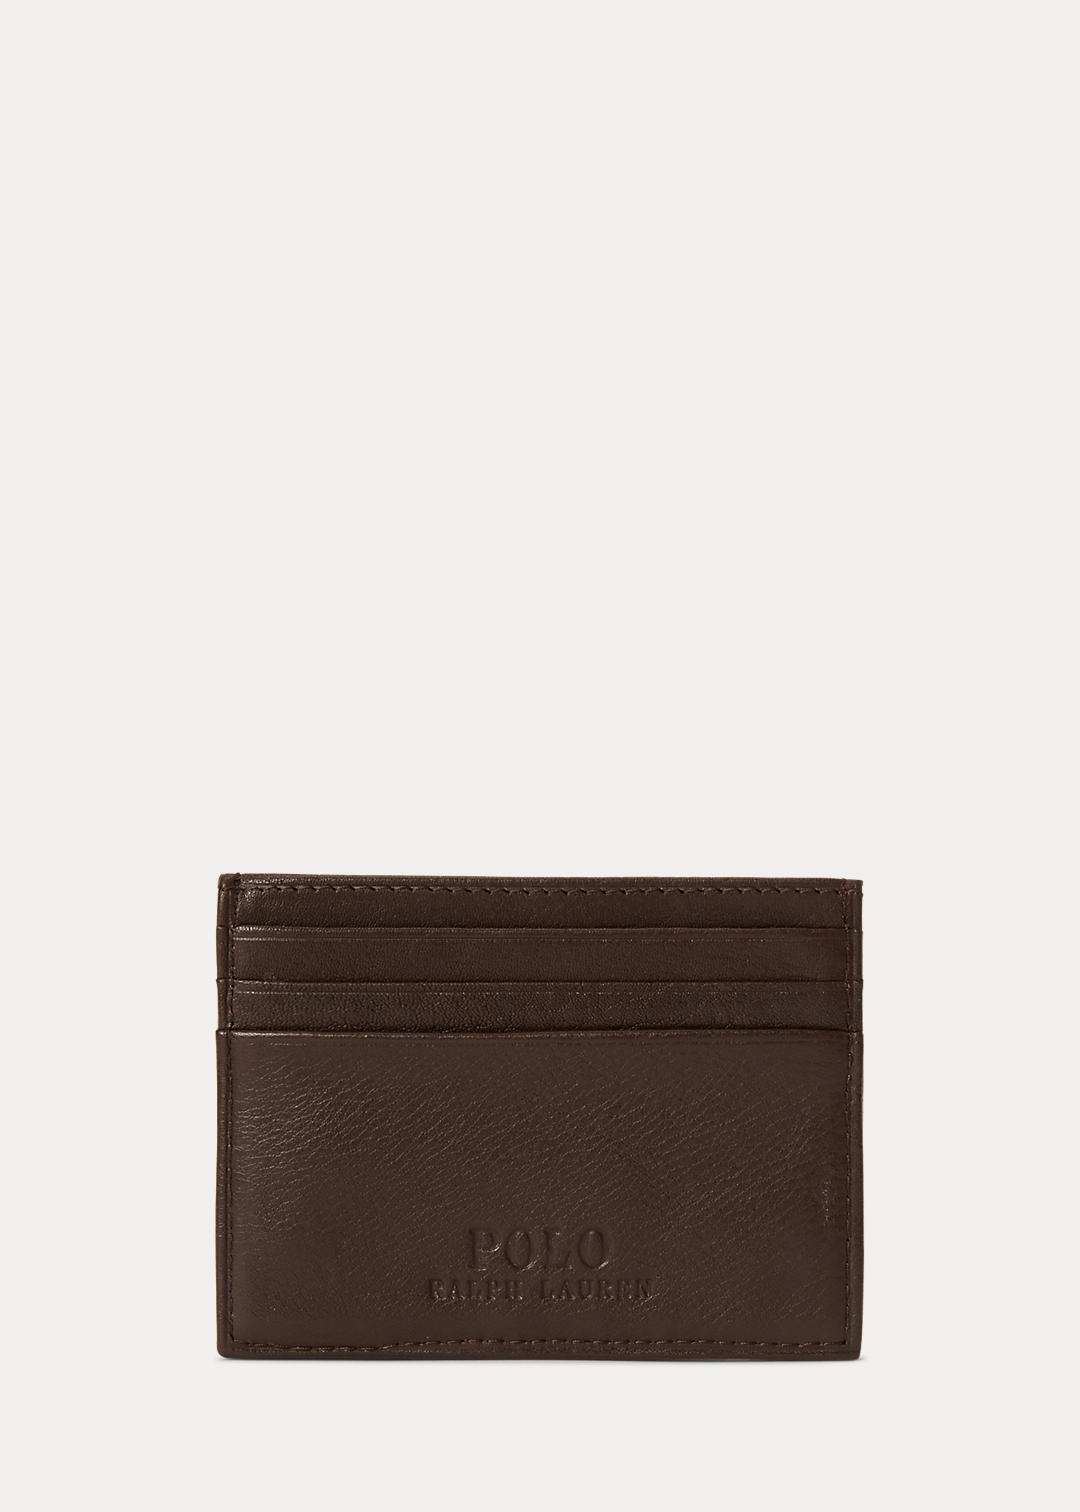 Polo Ralph Lauren Pebble Leather Card Case 2